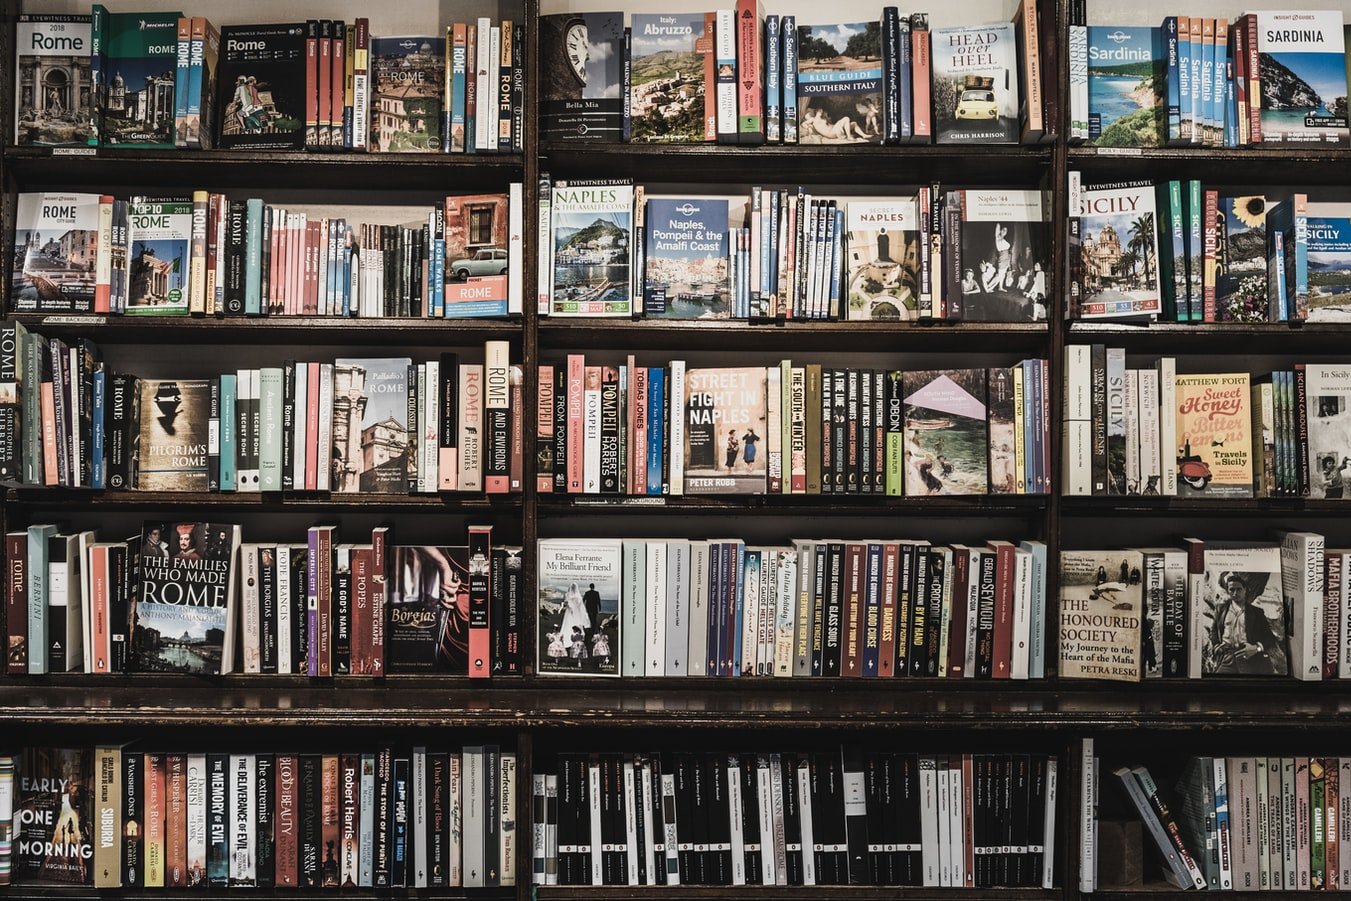 Books in the store | Source: Unsplash